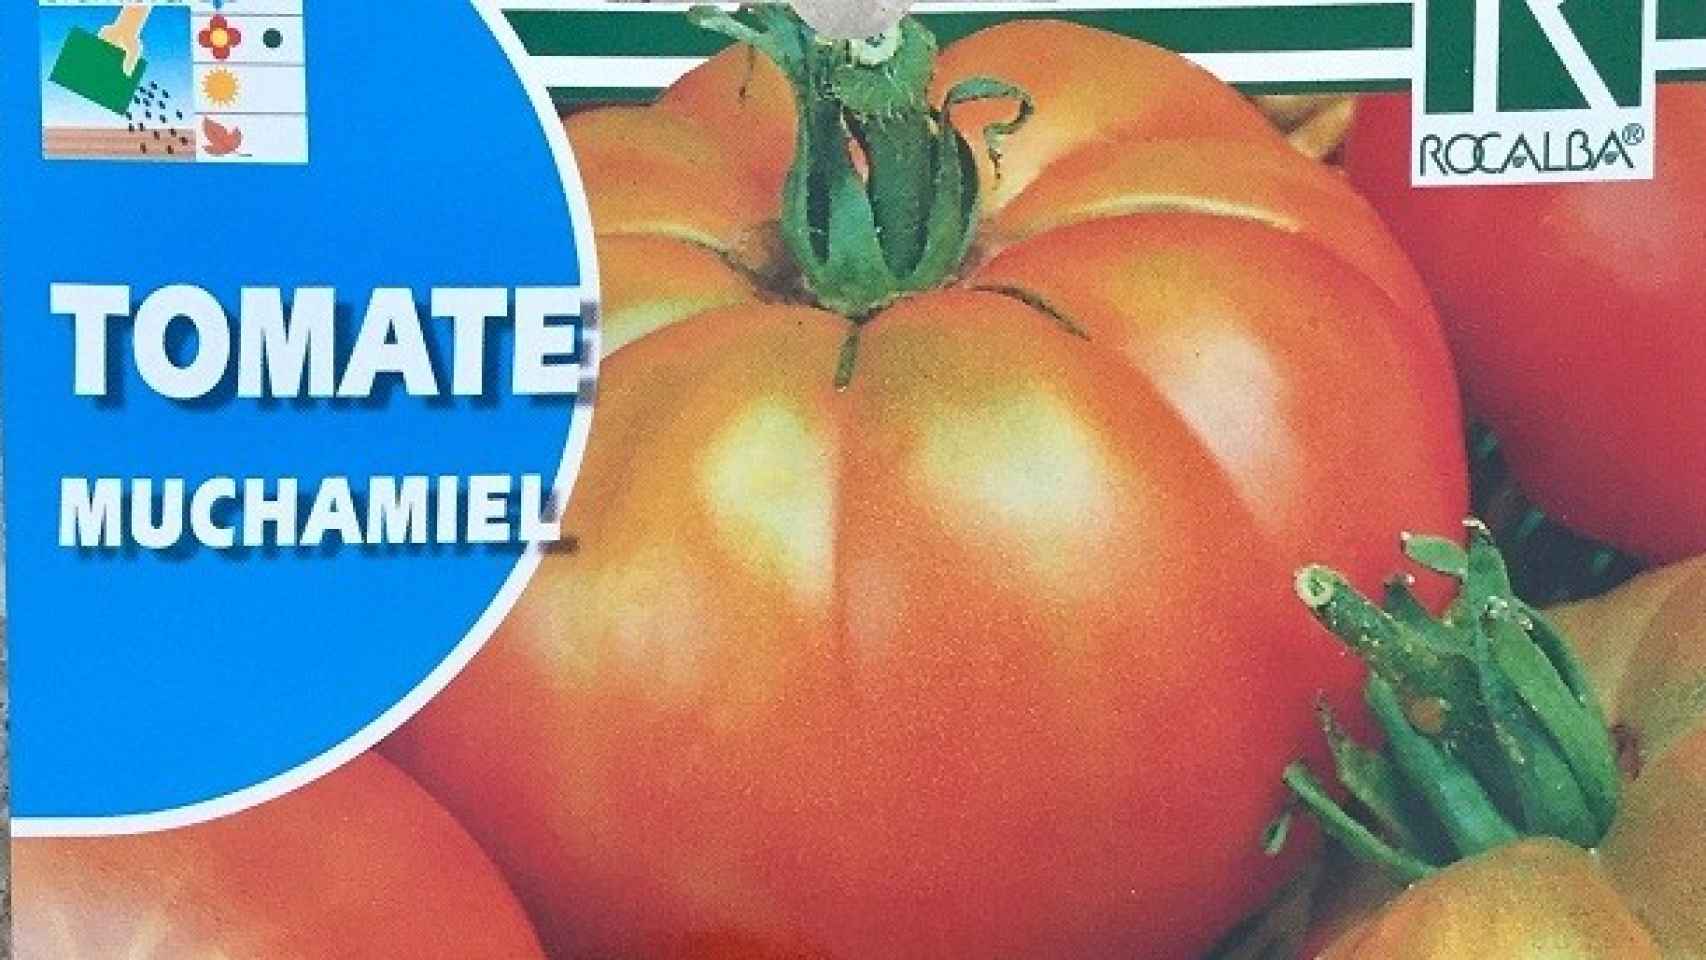 Un cartel promocional del 'Tomate de Muchamiel'.